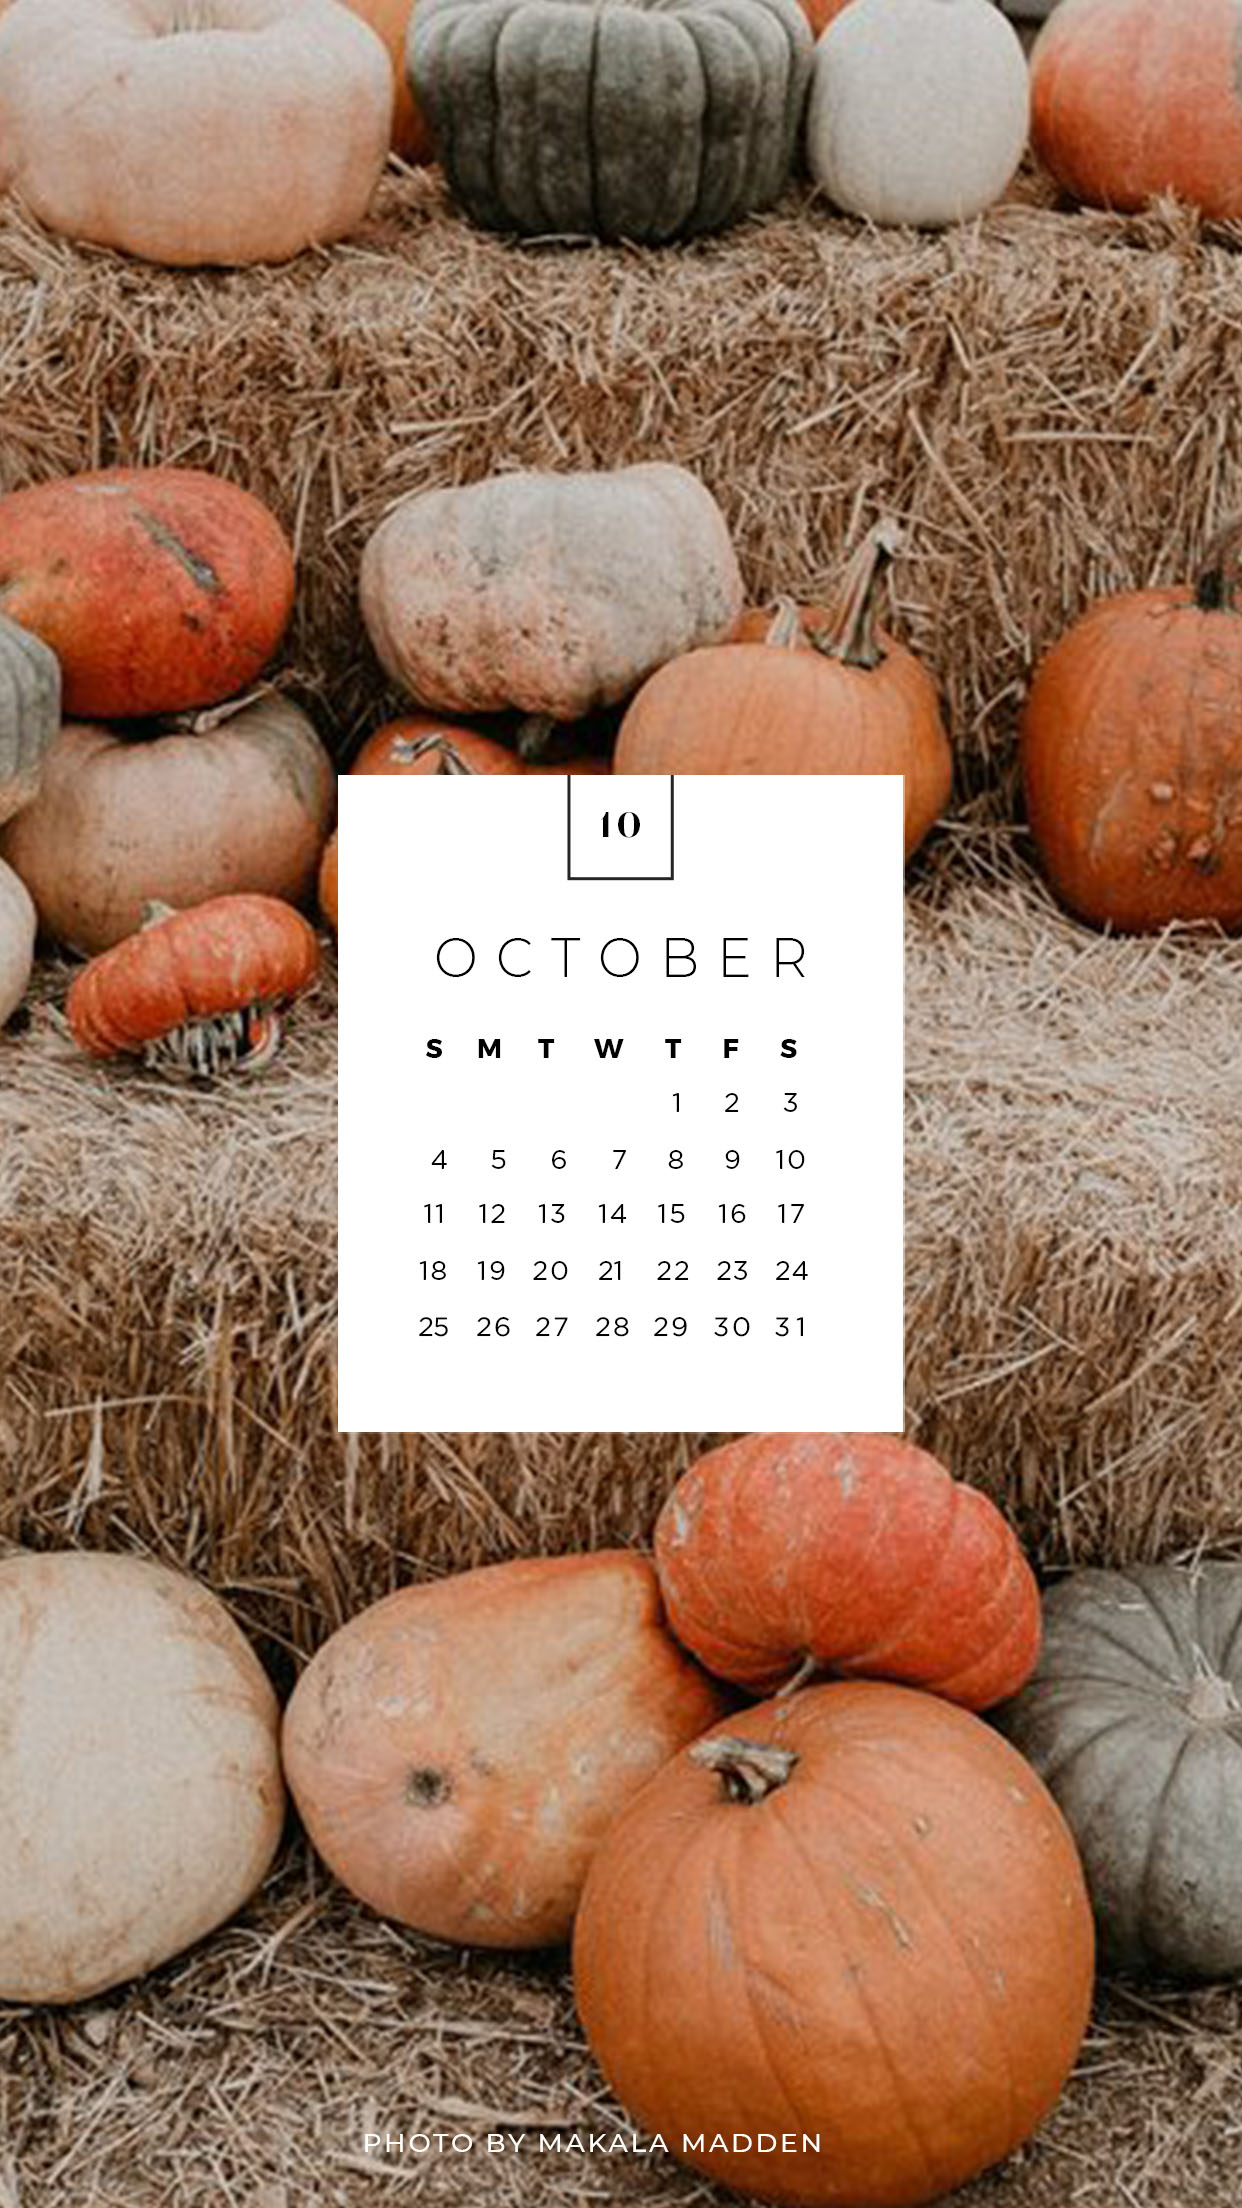 October free mobile wallpaper download.